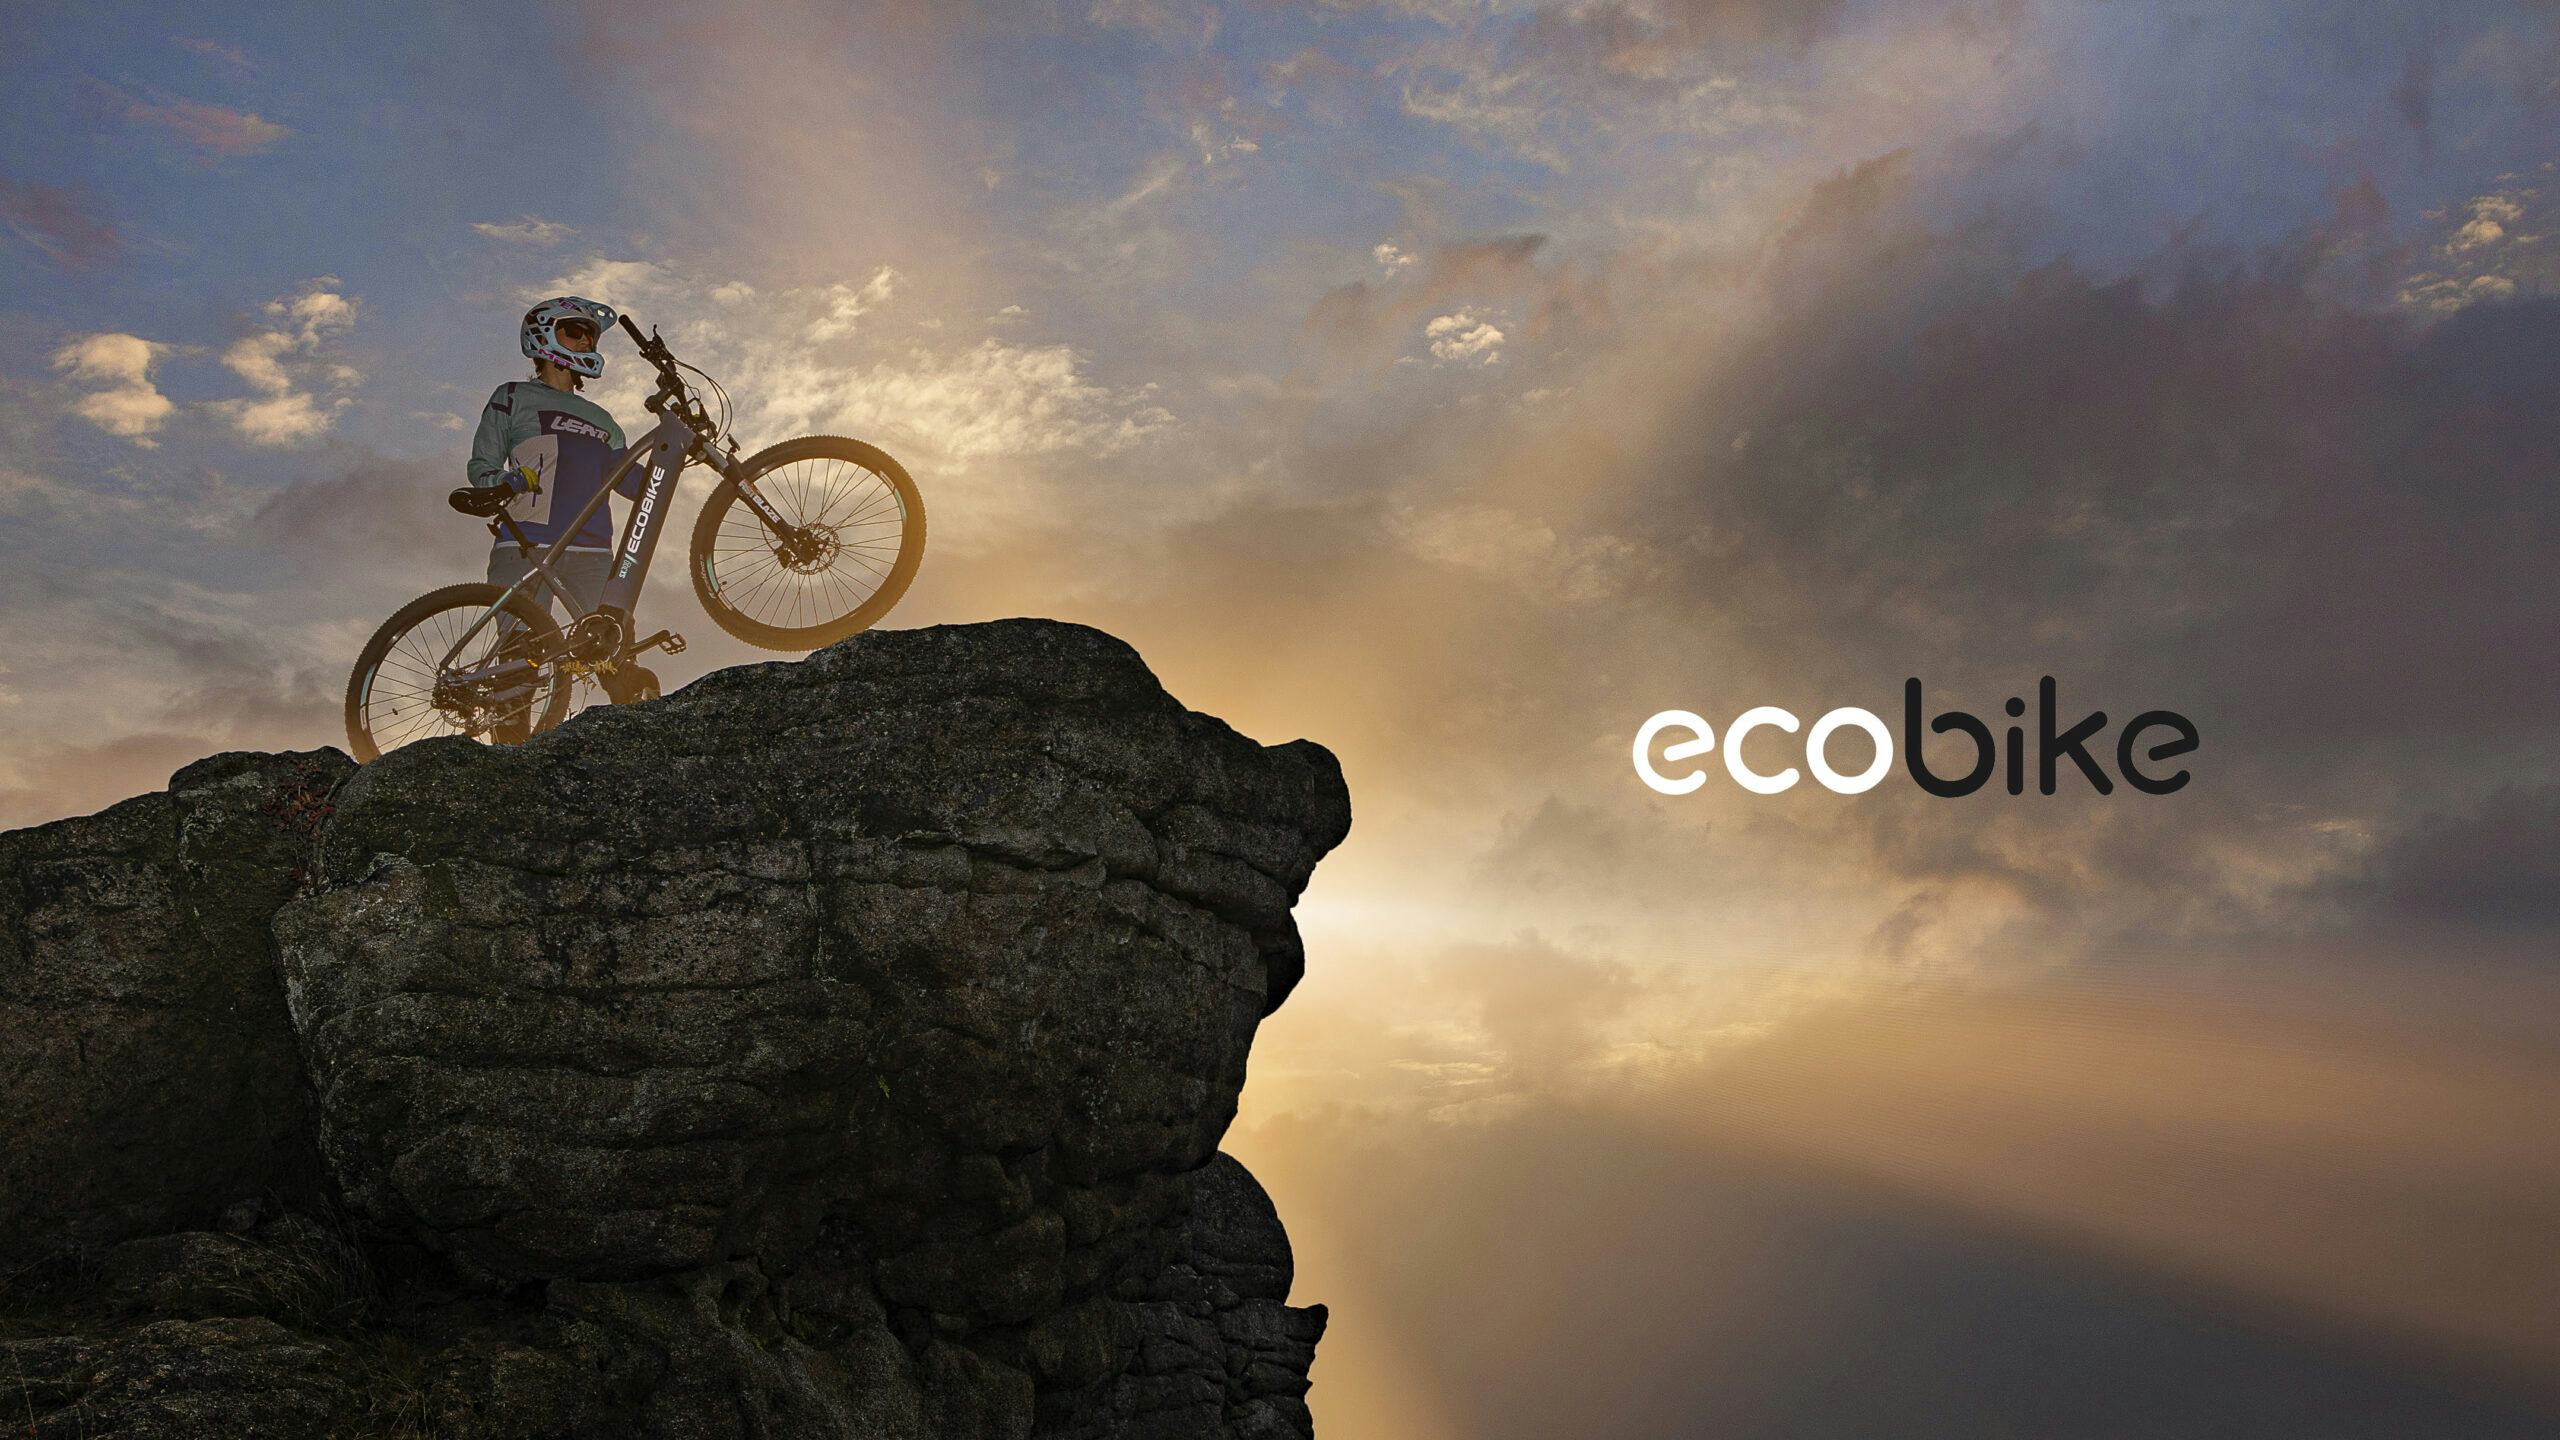 Ecobike: Poland's e-bike manufacturing experience